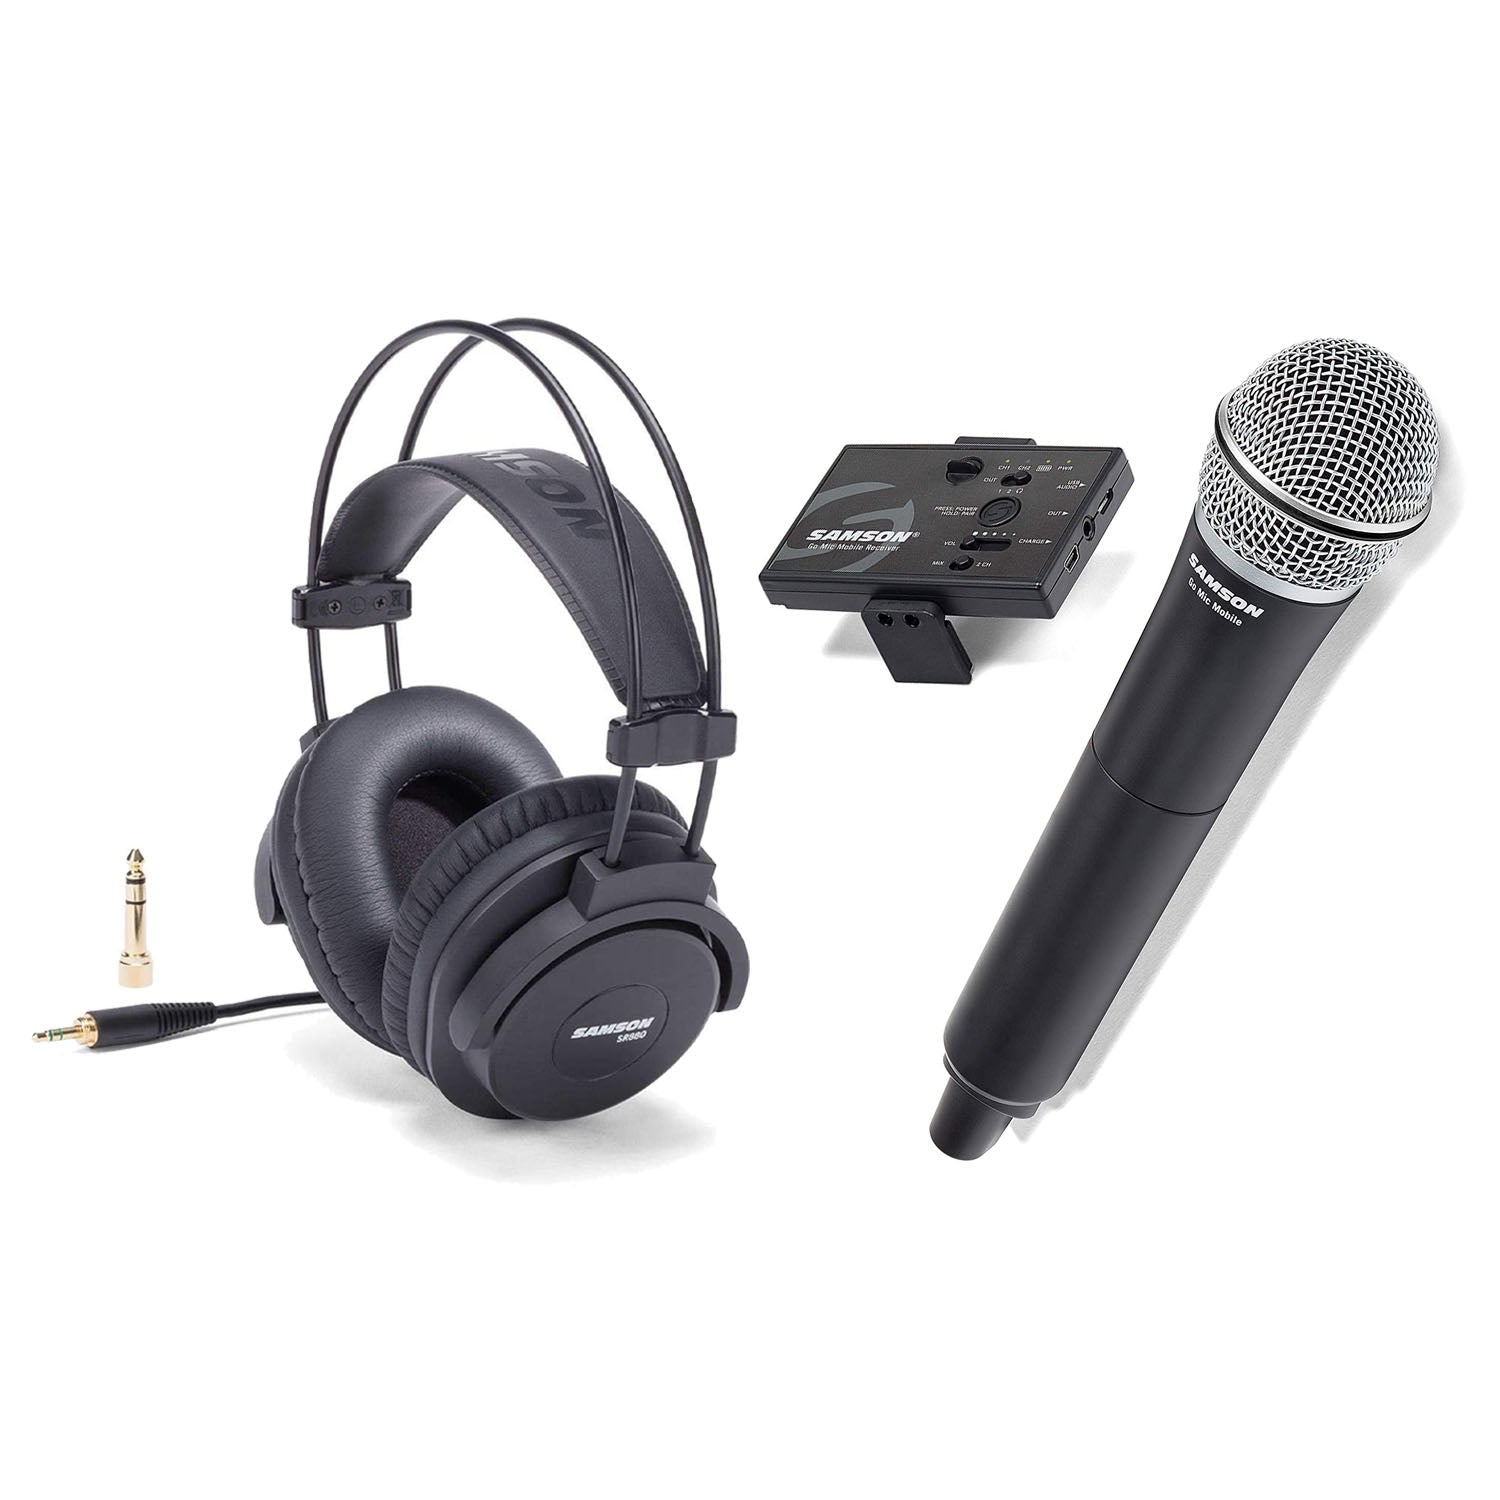 Samson Go Mic Wireless System Q8 Microphone and SR880 Closed-Back Headphones Bundle - Pro-Distributing